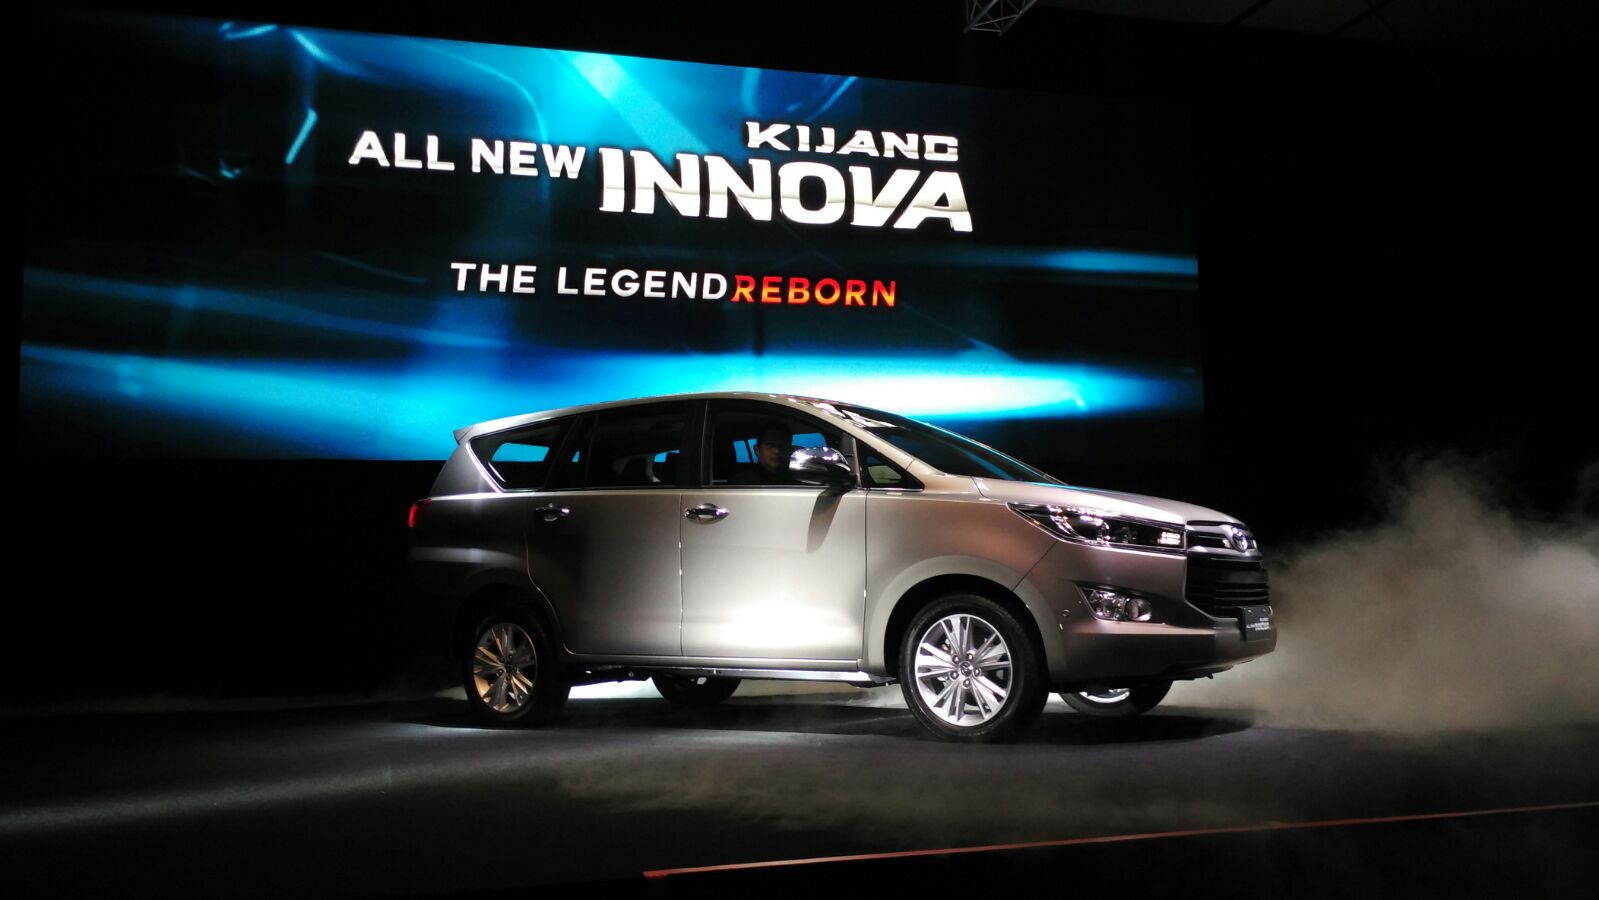 Berita, Toyota Kijang Innova 2016 New Model: All New Toyota Kijang Innova 2016 Diluncurkan di Indonesia!